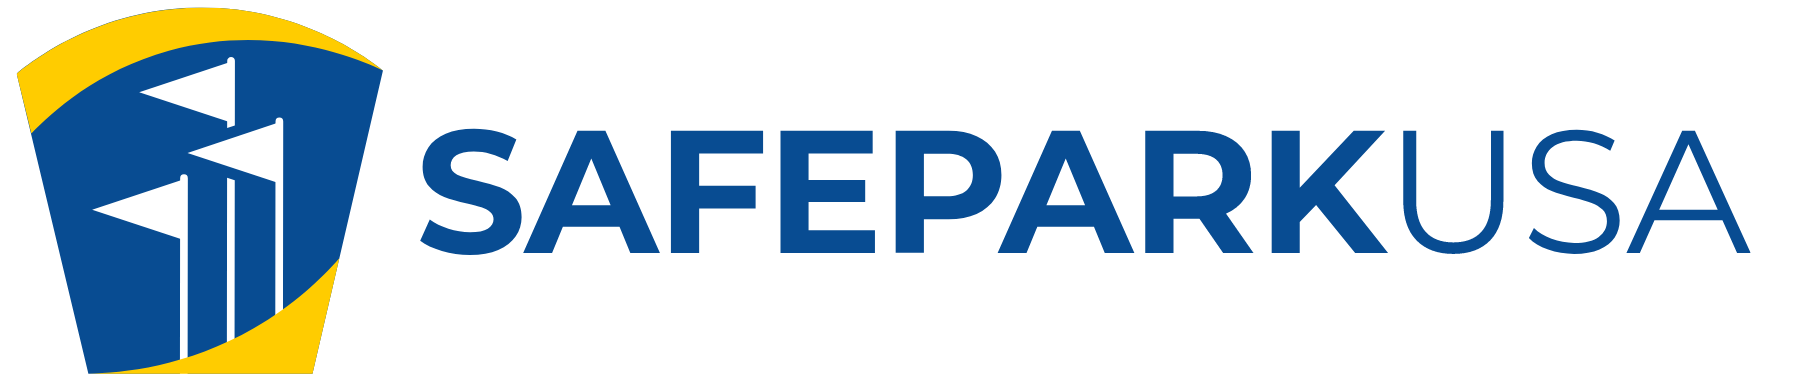 SafePark-USA-logo